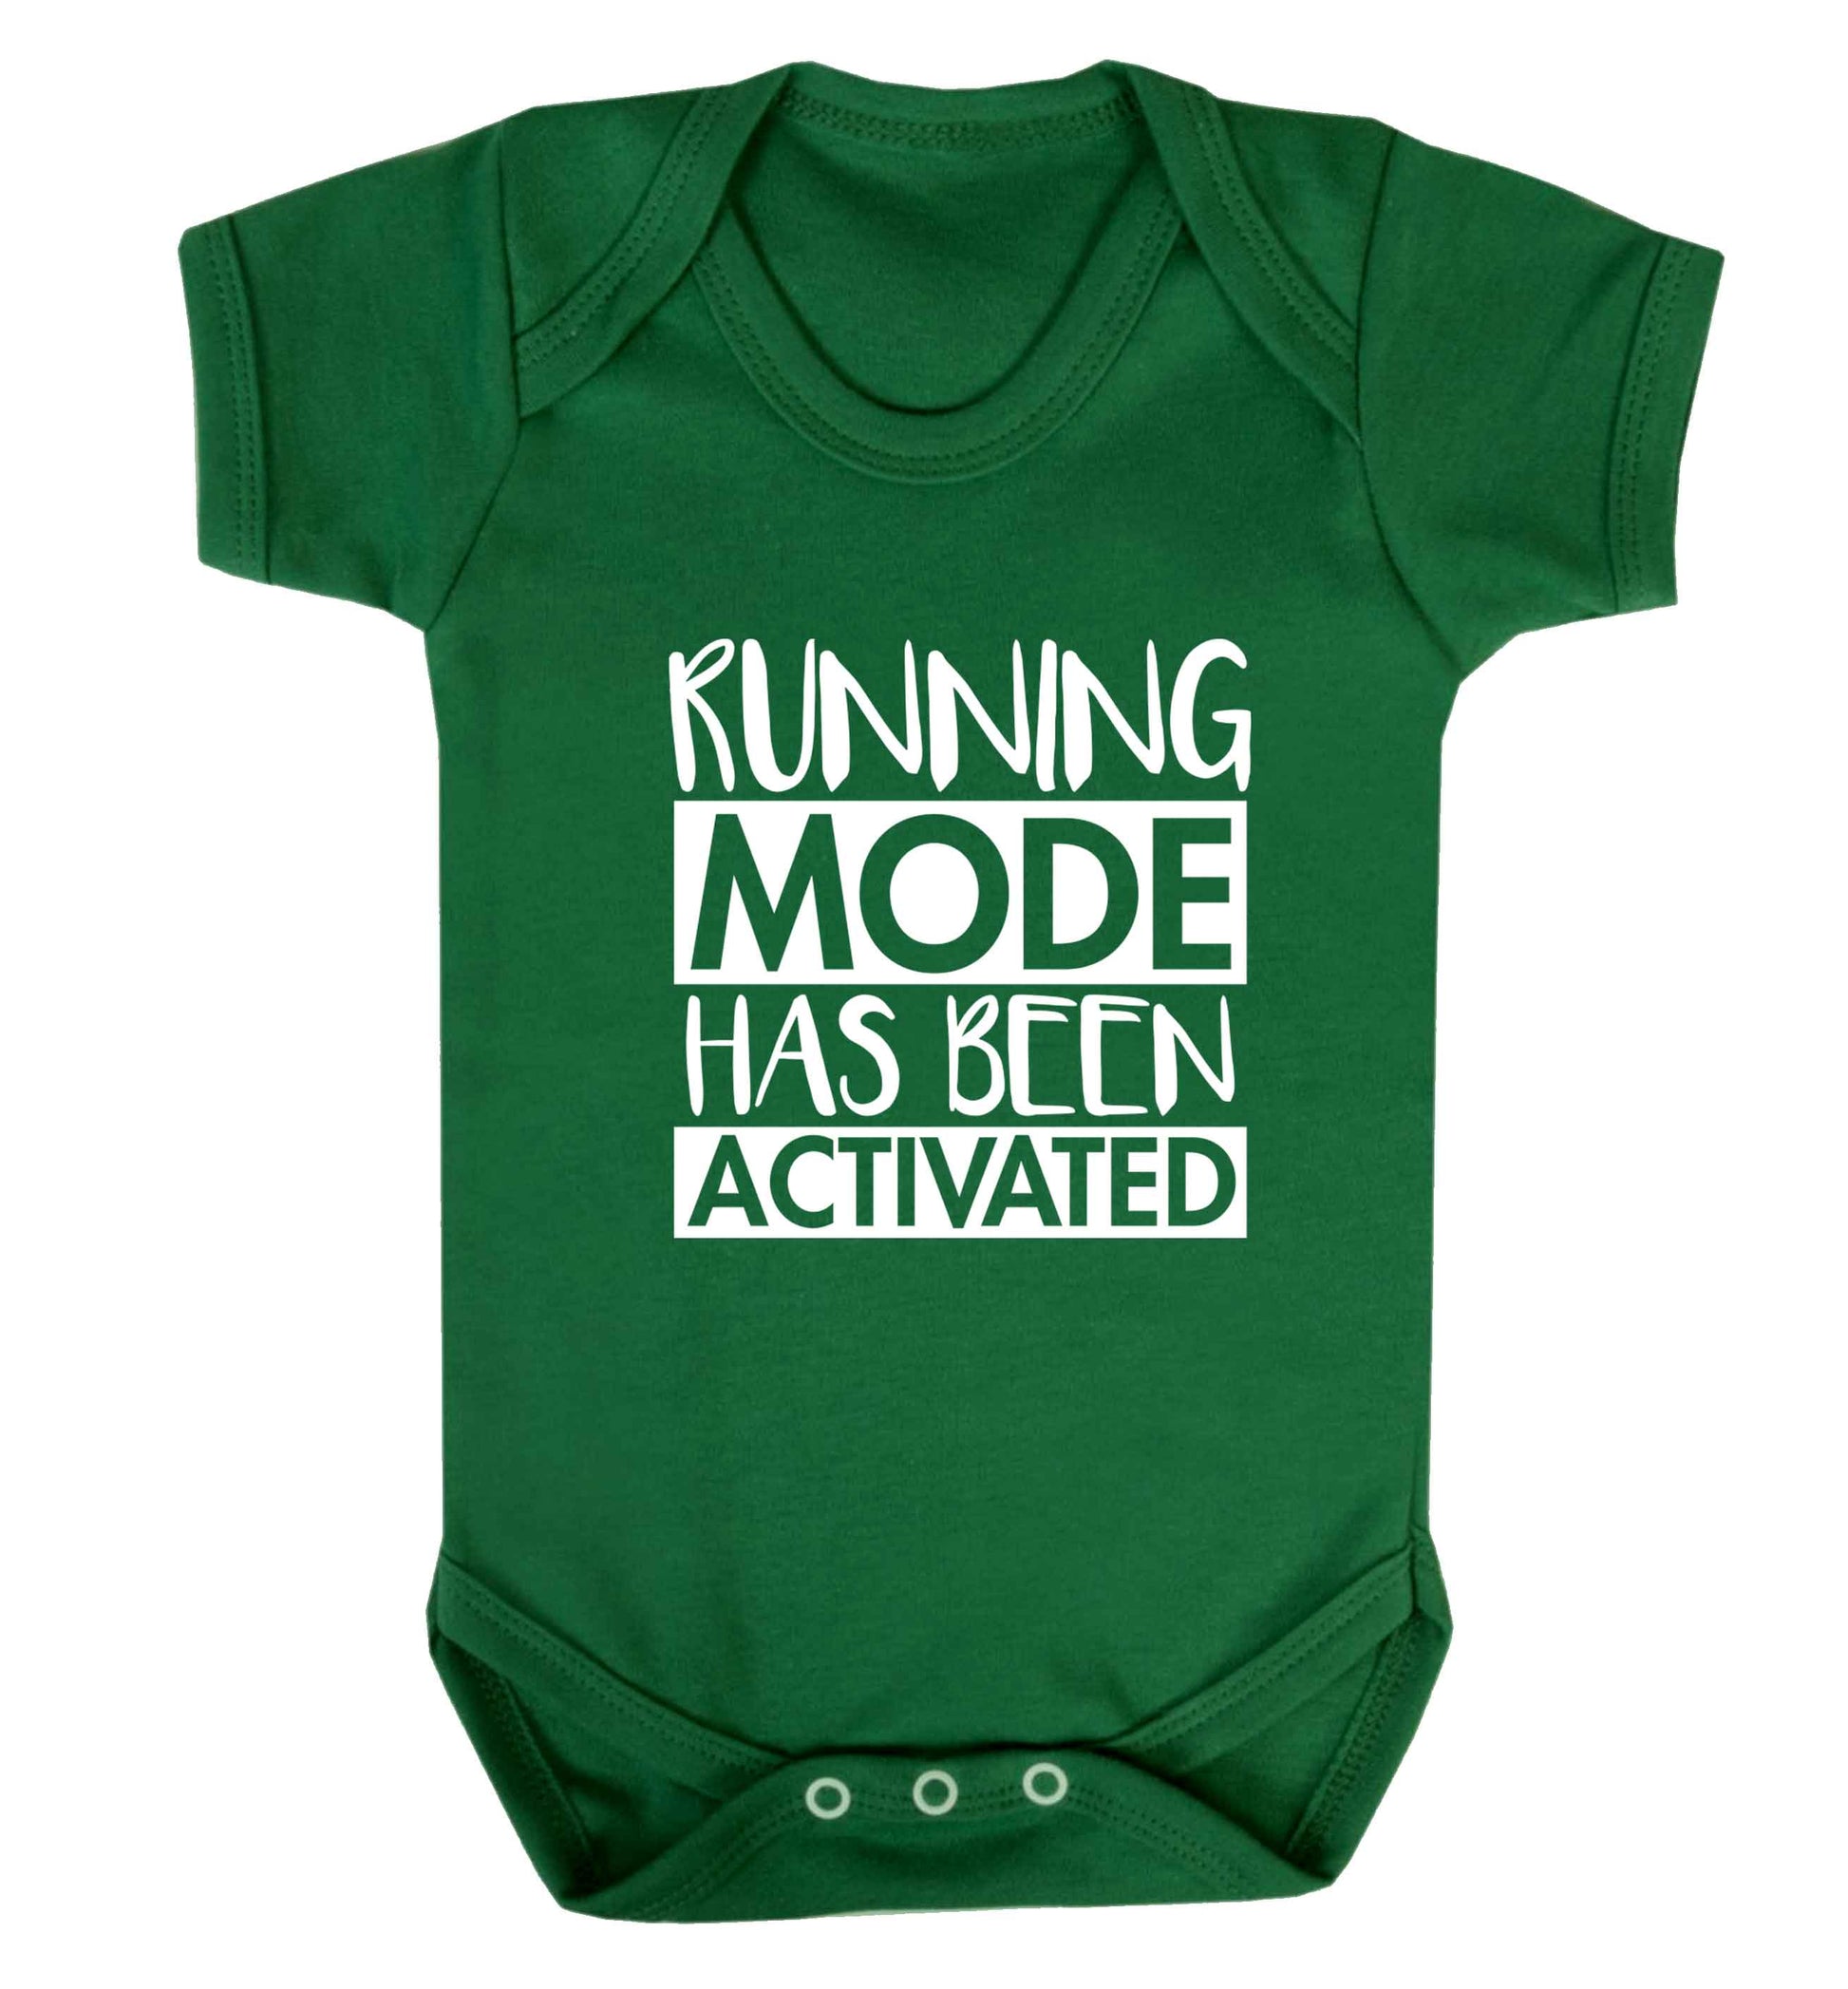 Running mode has been activated baby vest green 18-24 months